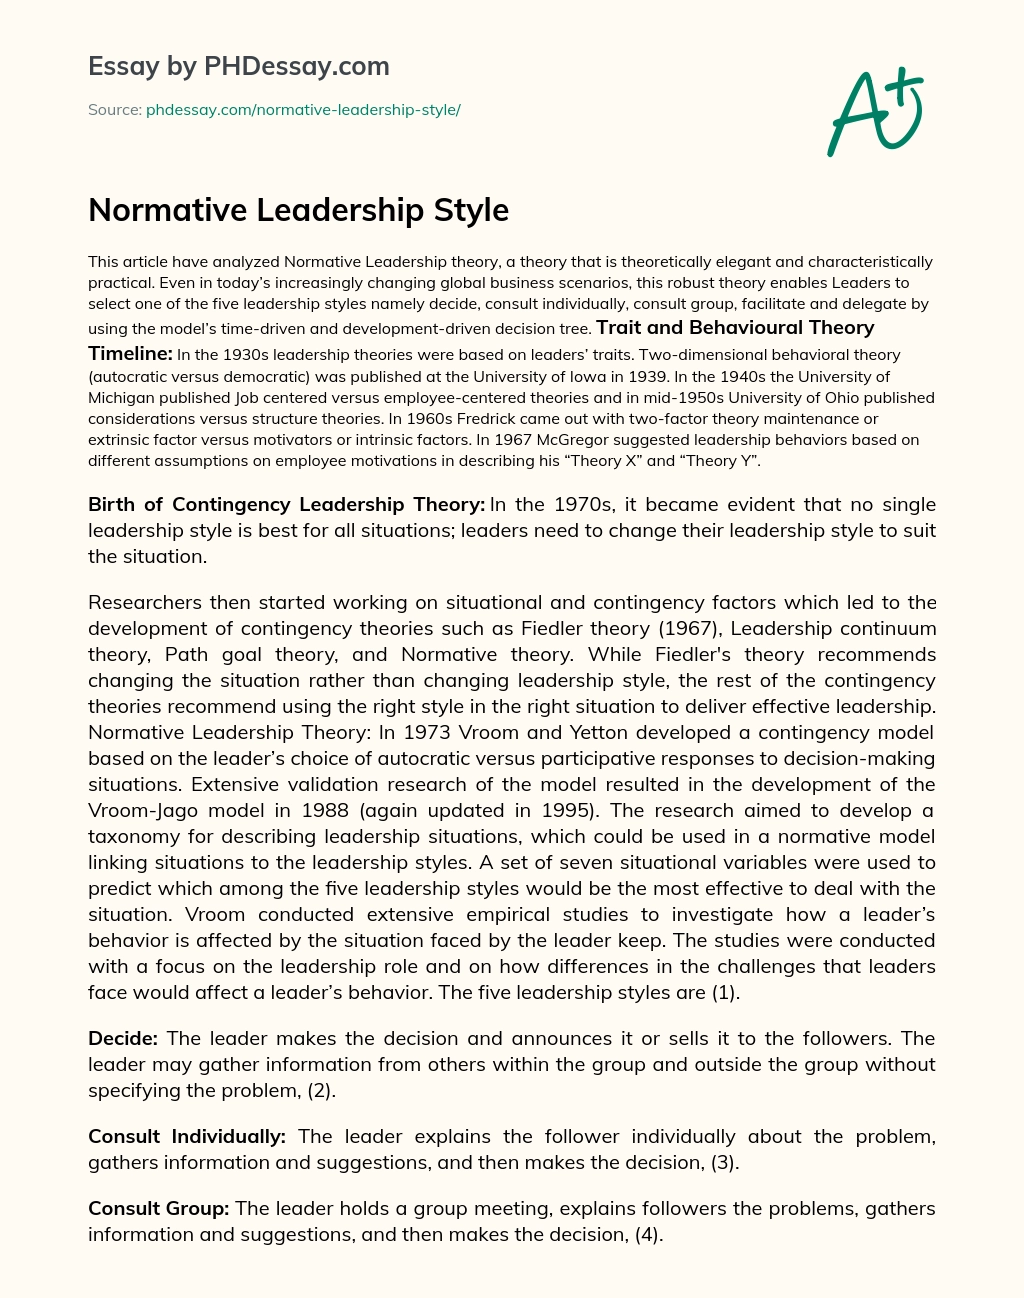 Normative Leadership Style essay